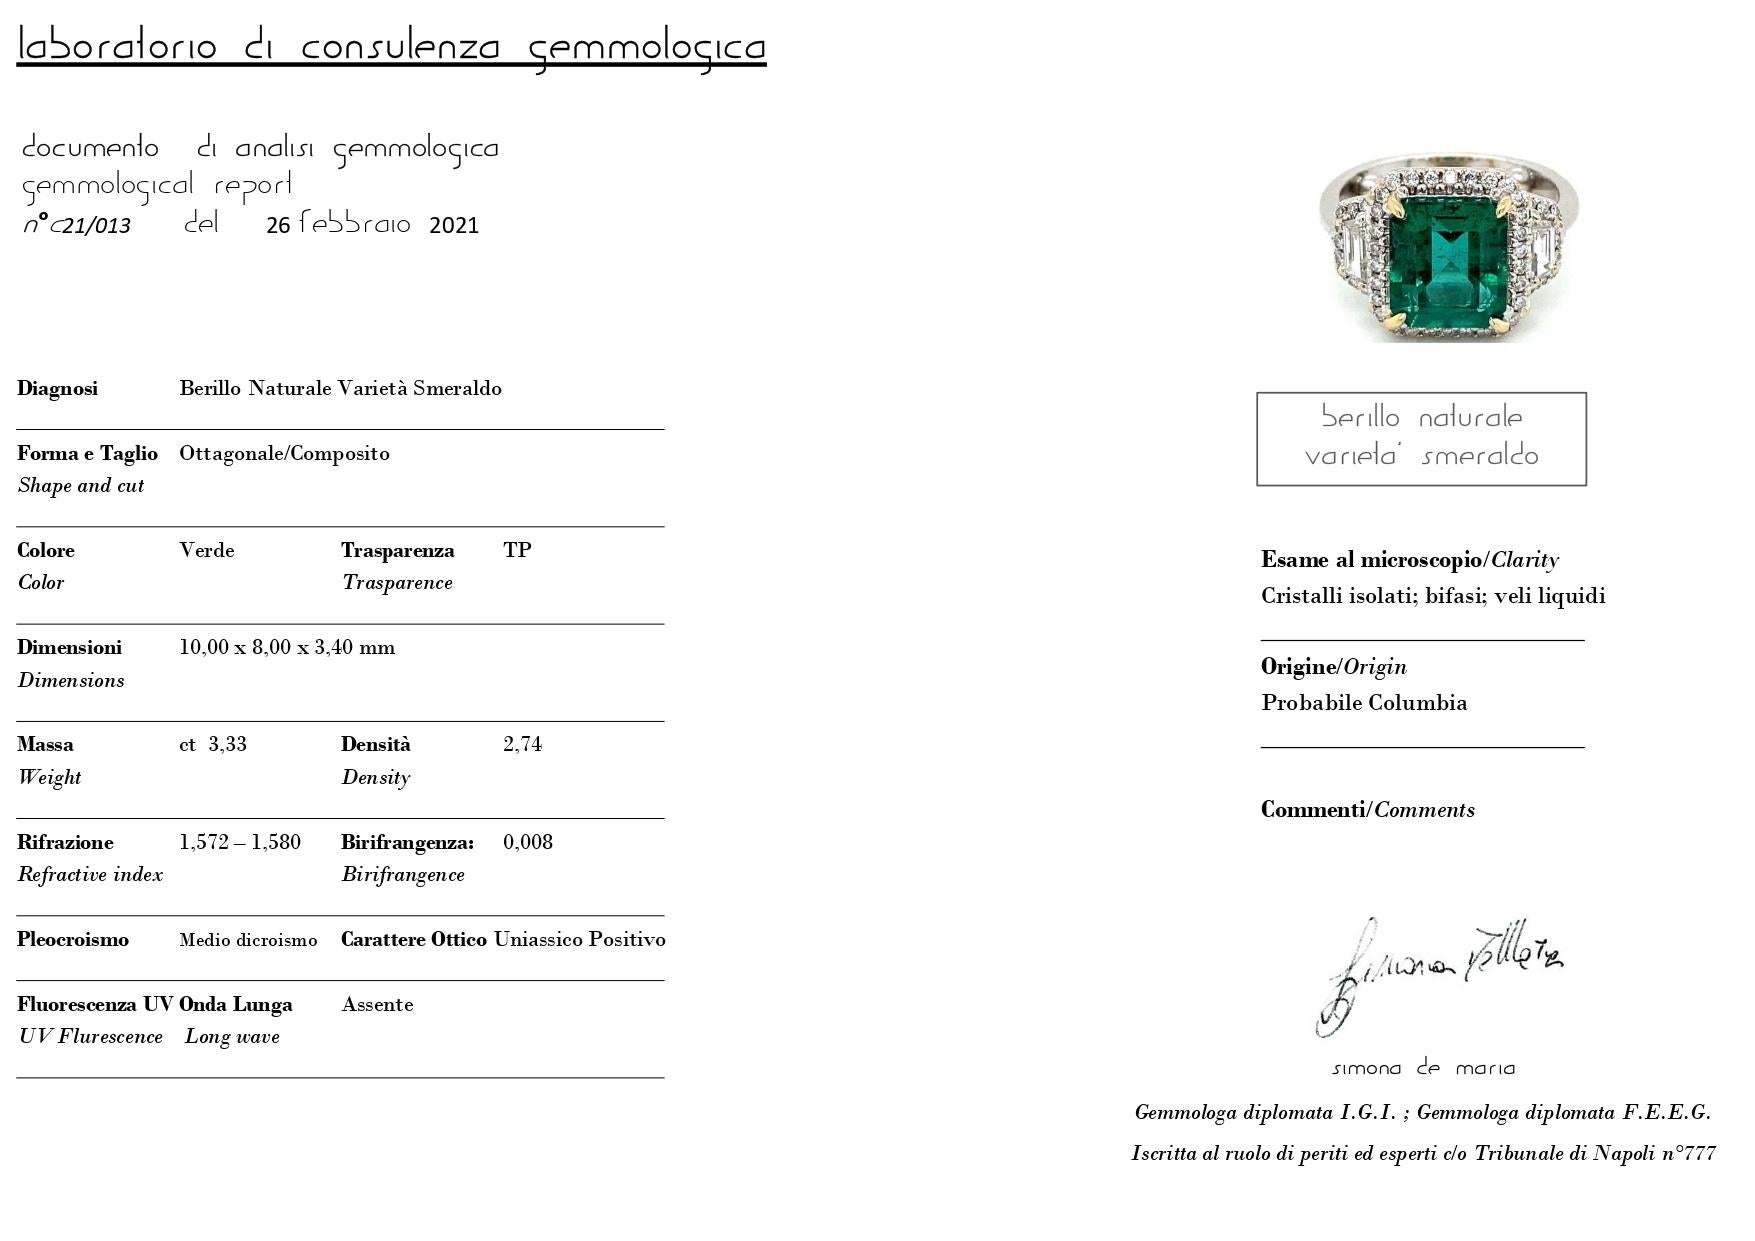 Estate Certified 3.34 Carat Natural Emerald Diamond Ring For Sale 7